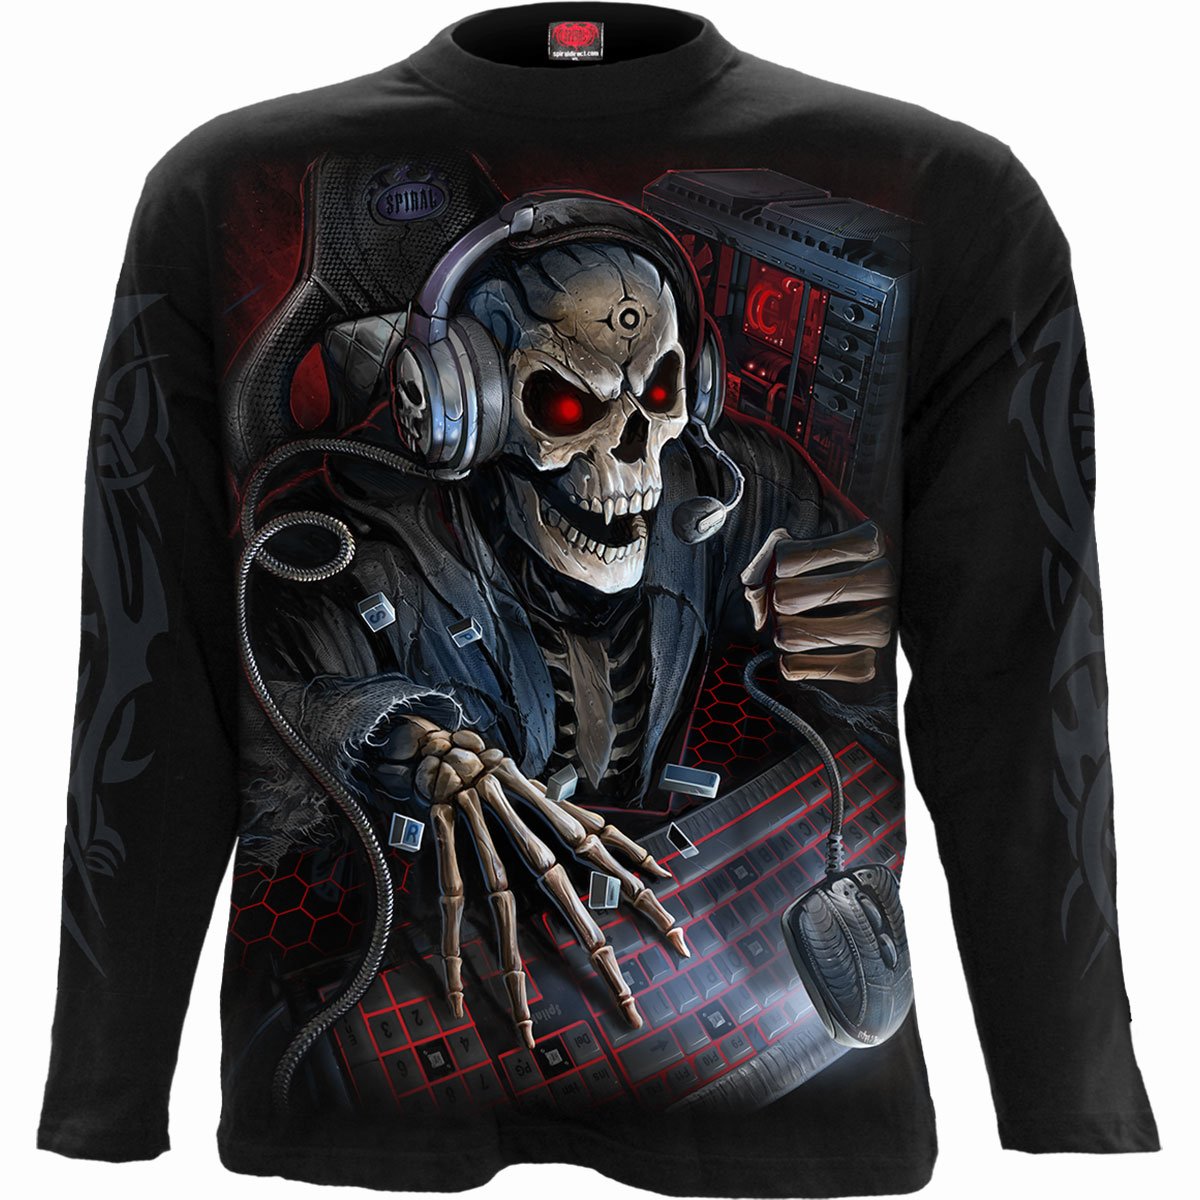 PC GAMER - Longsleeve T-Shirt Black